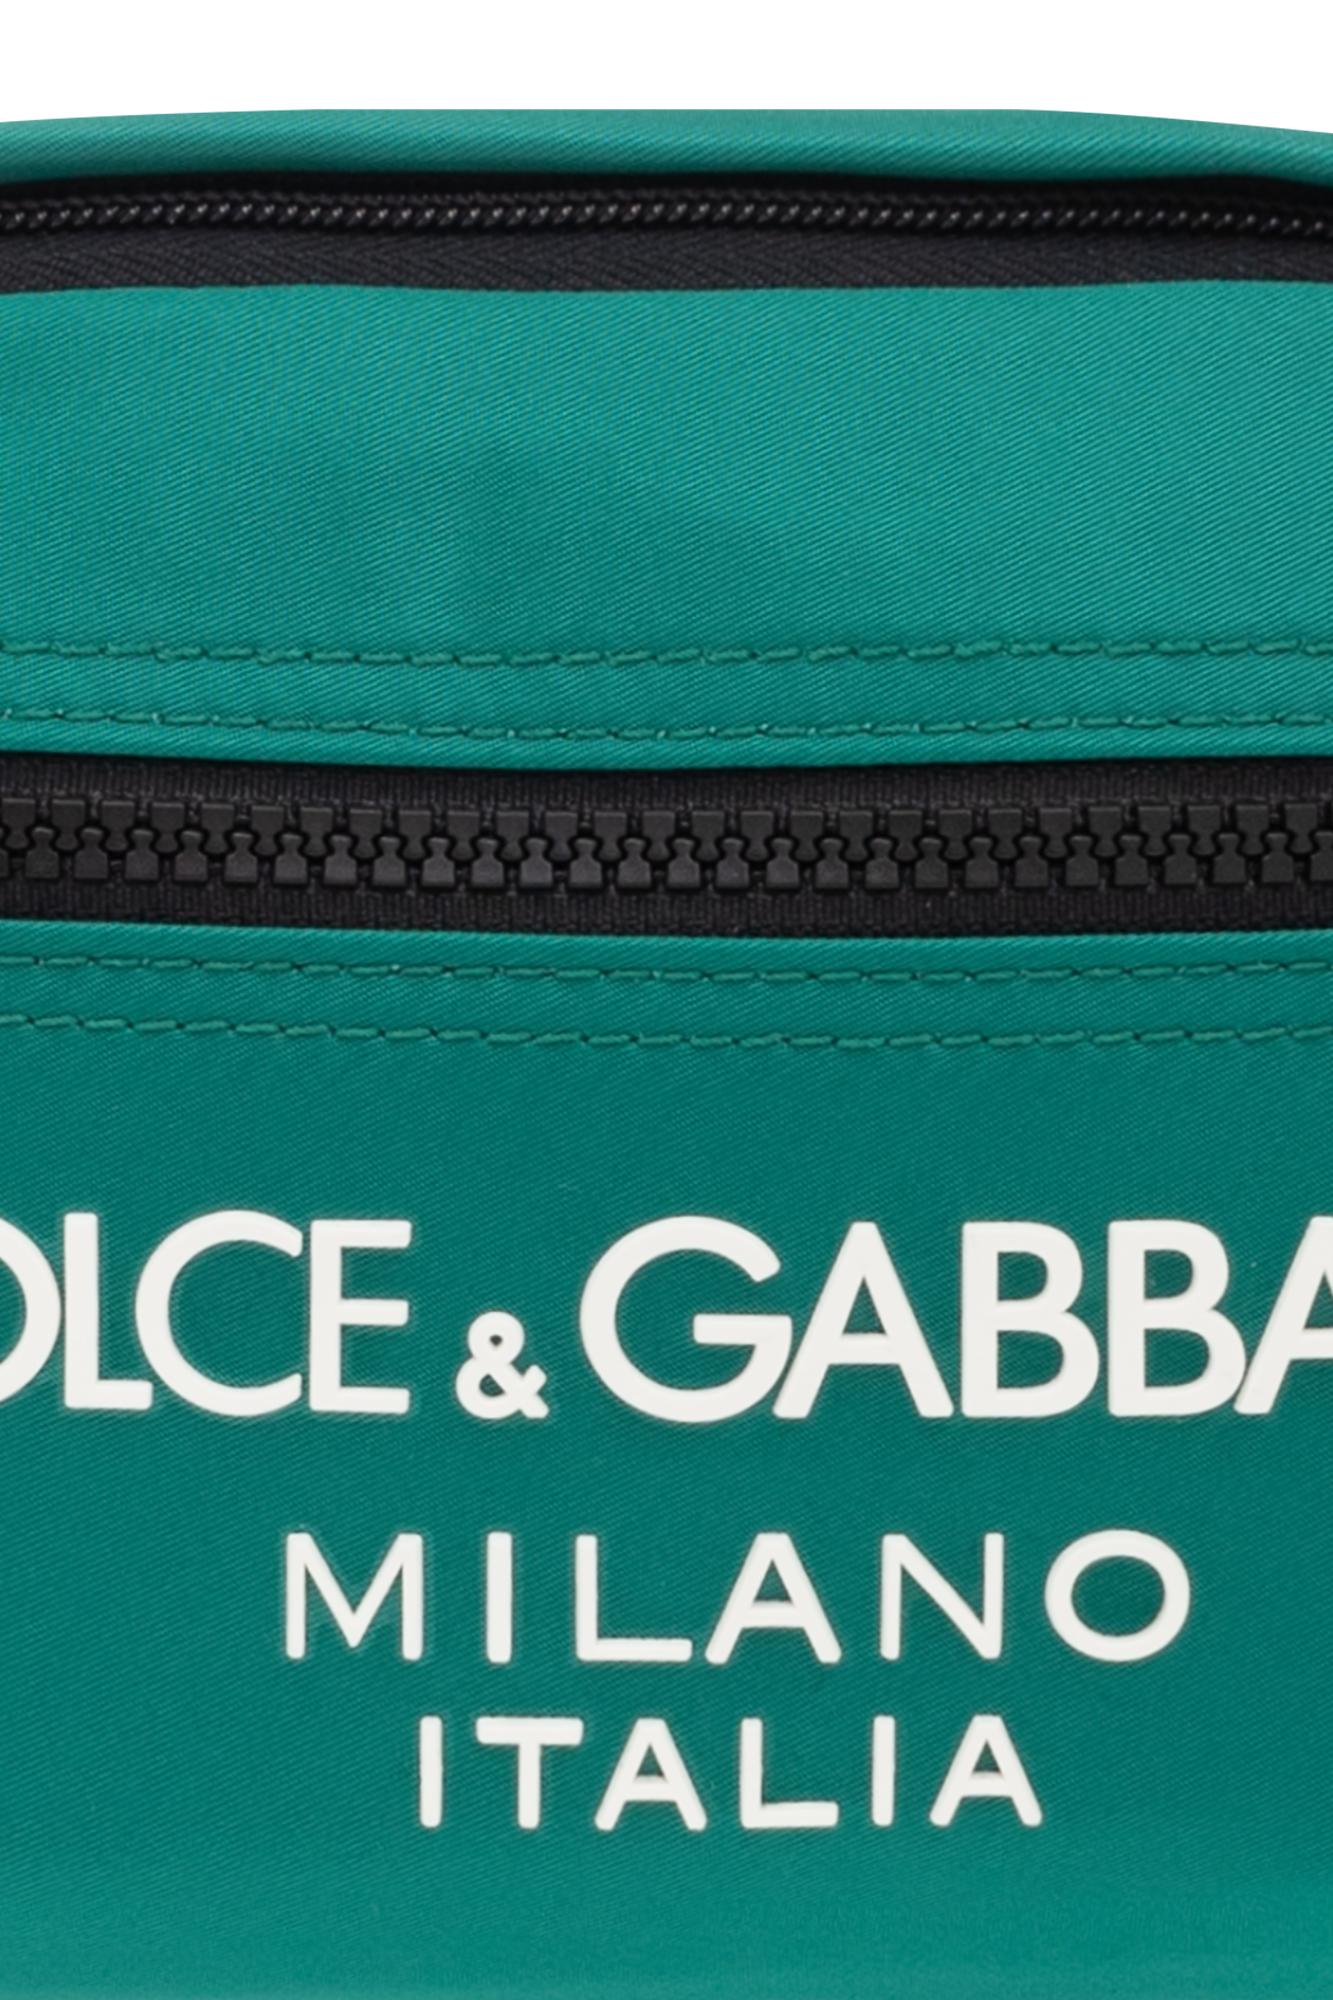 Dolce & Gabbana raised-logo Belt Bag - Green